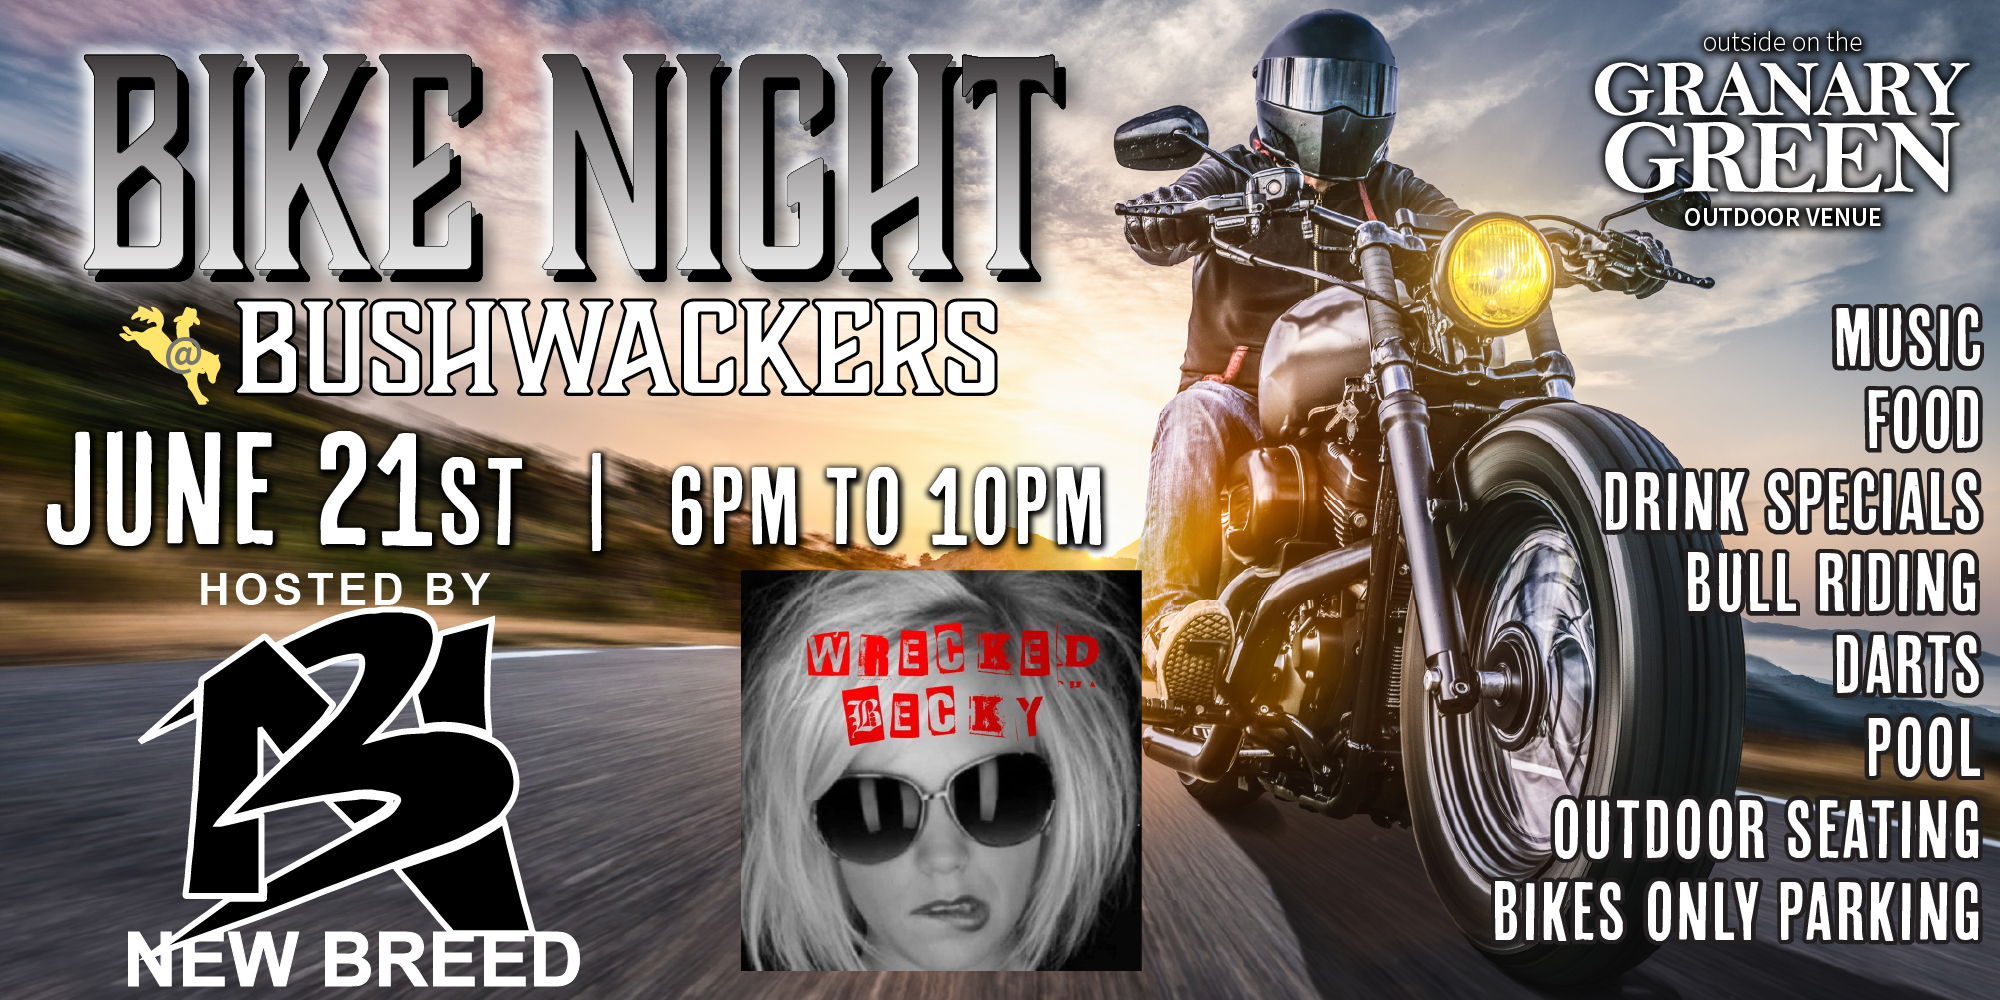 Bike Night @ Bushwackers promotional image